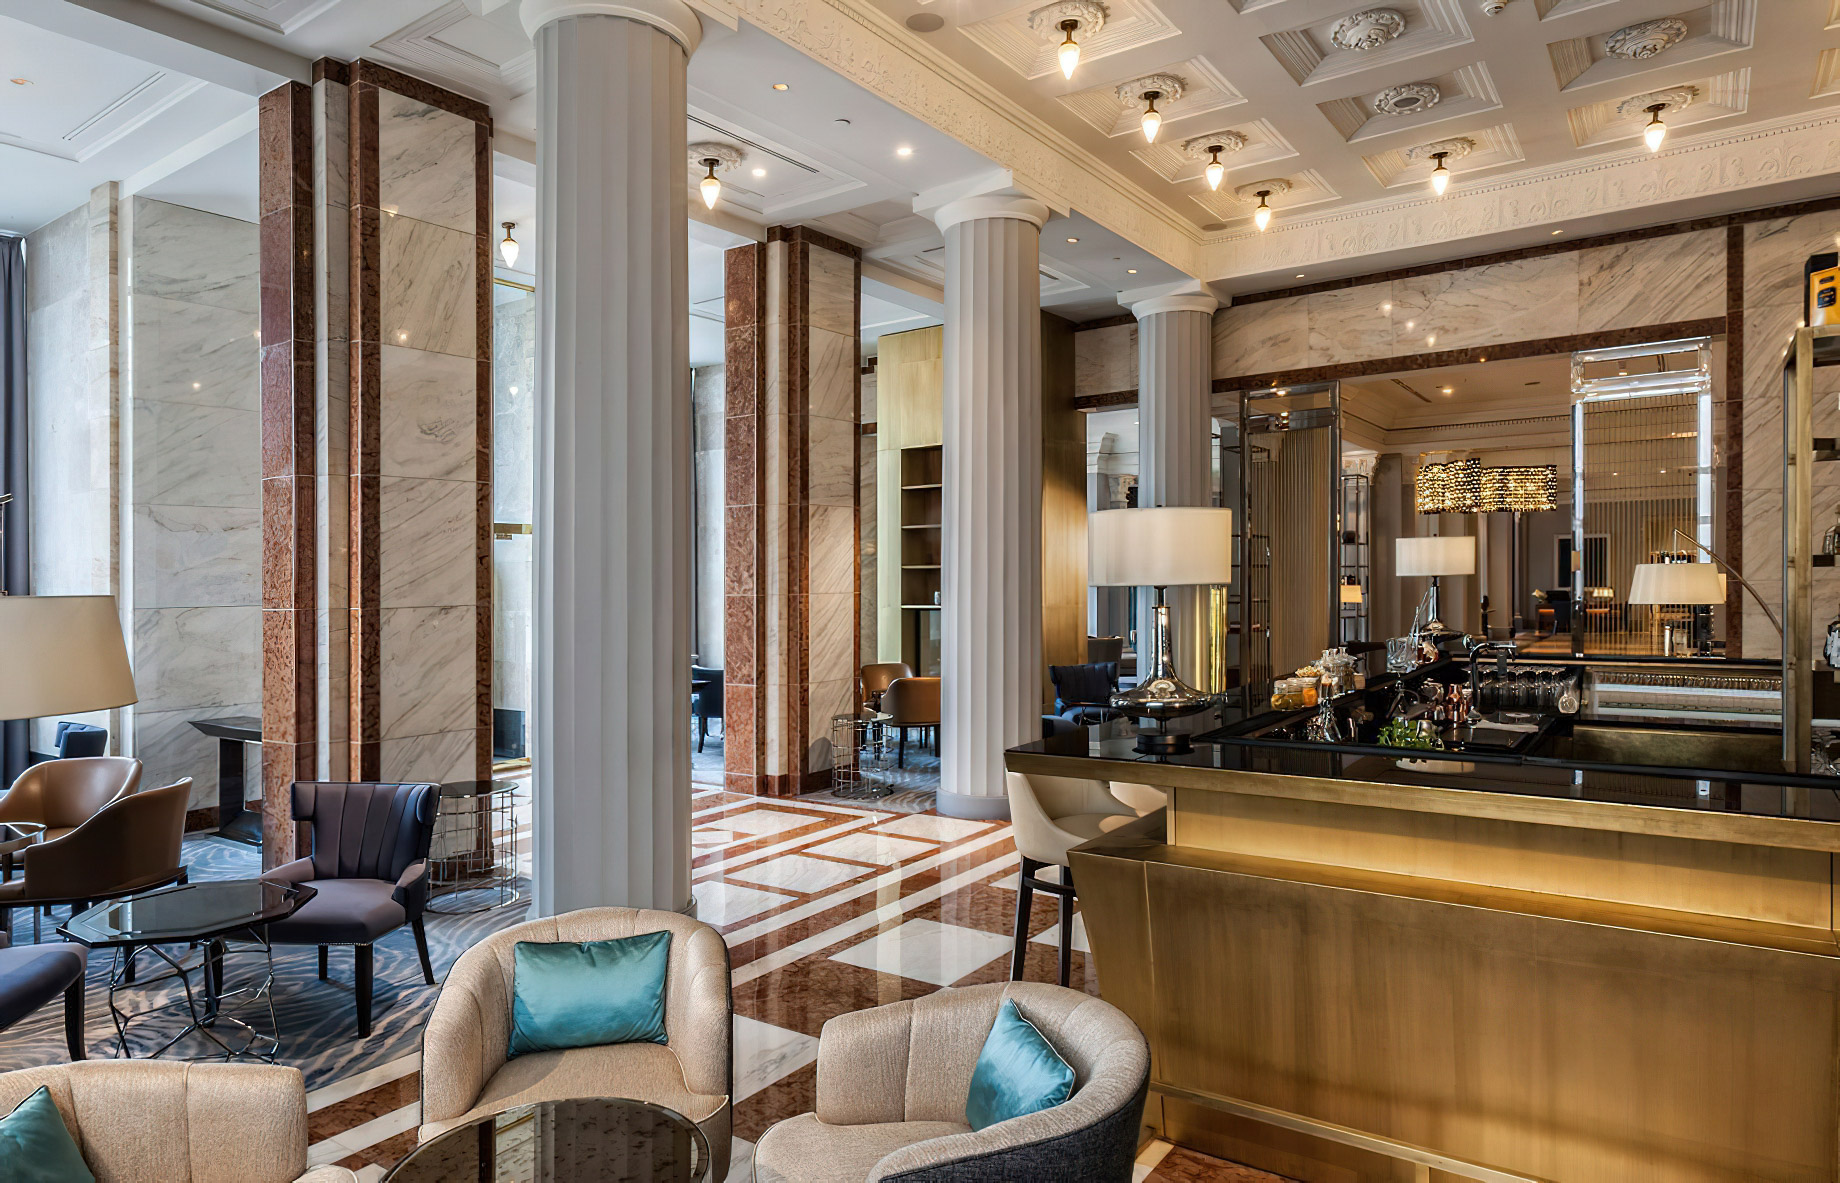 The Ritz-Carlton, Budapest Hotel – Budapest, Hungary – Kaffee Wein Interior